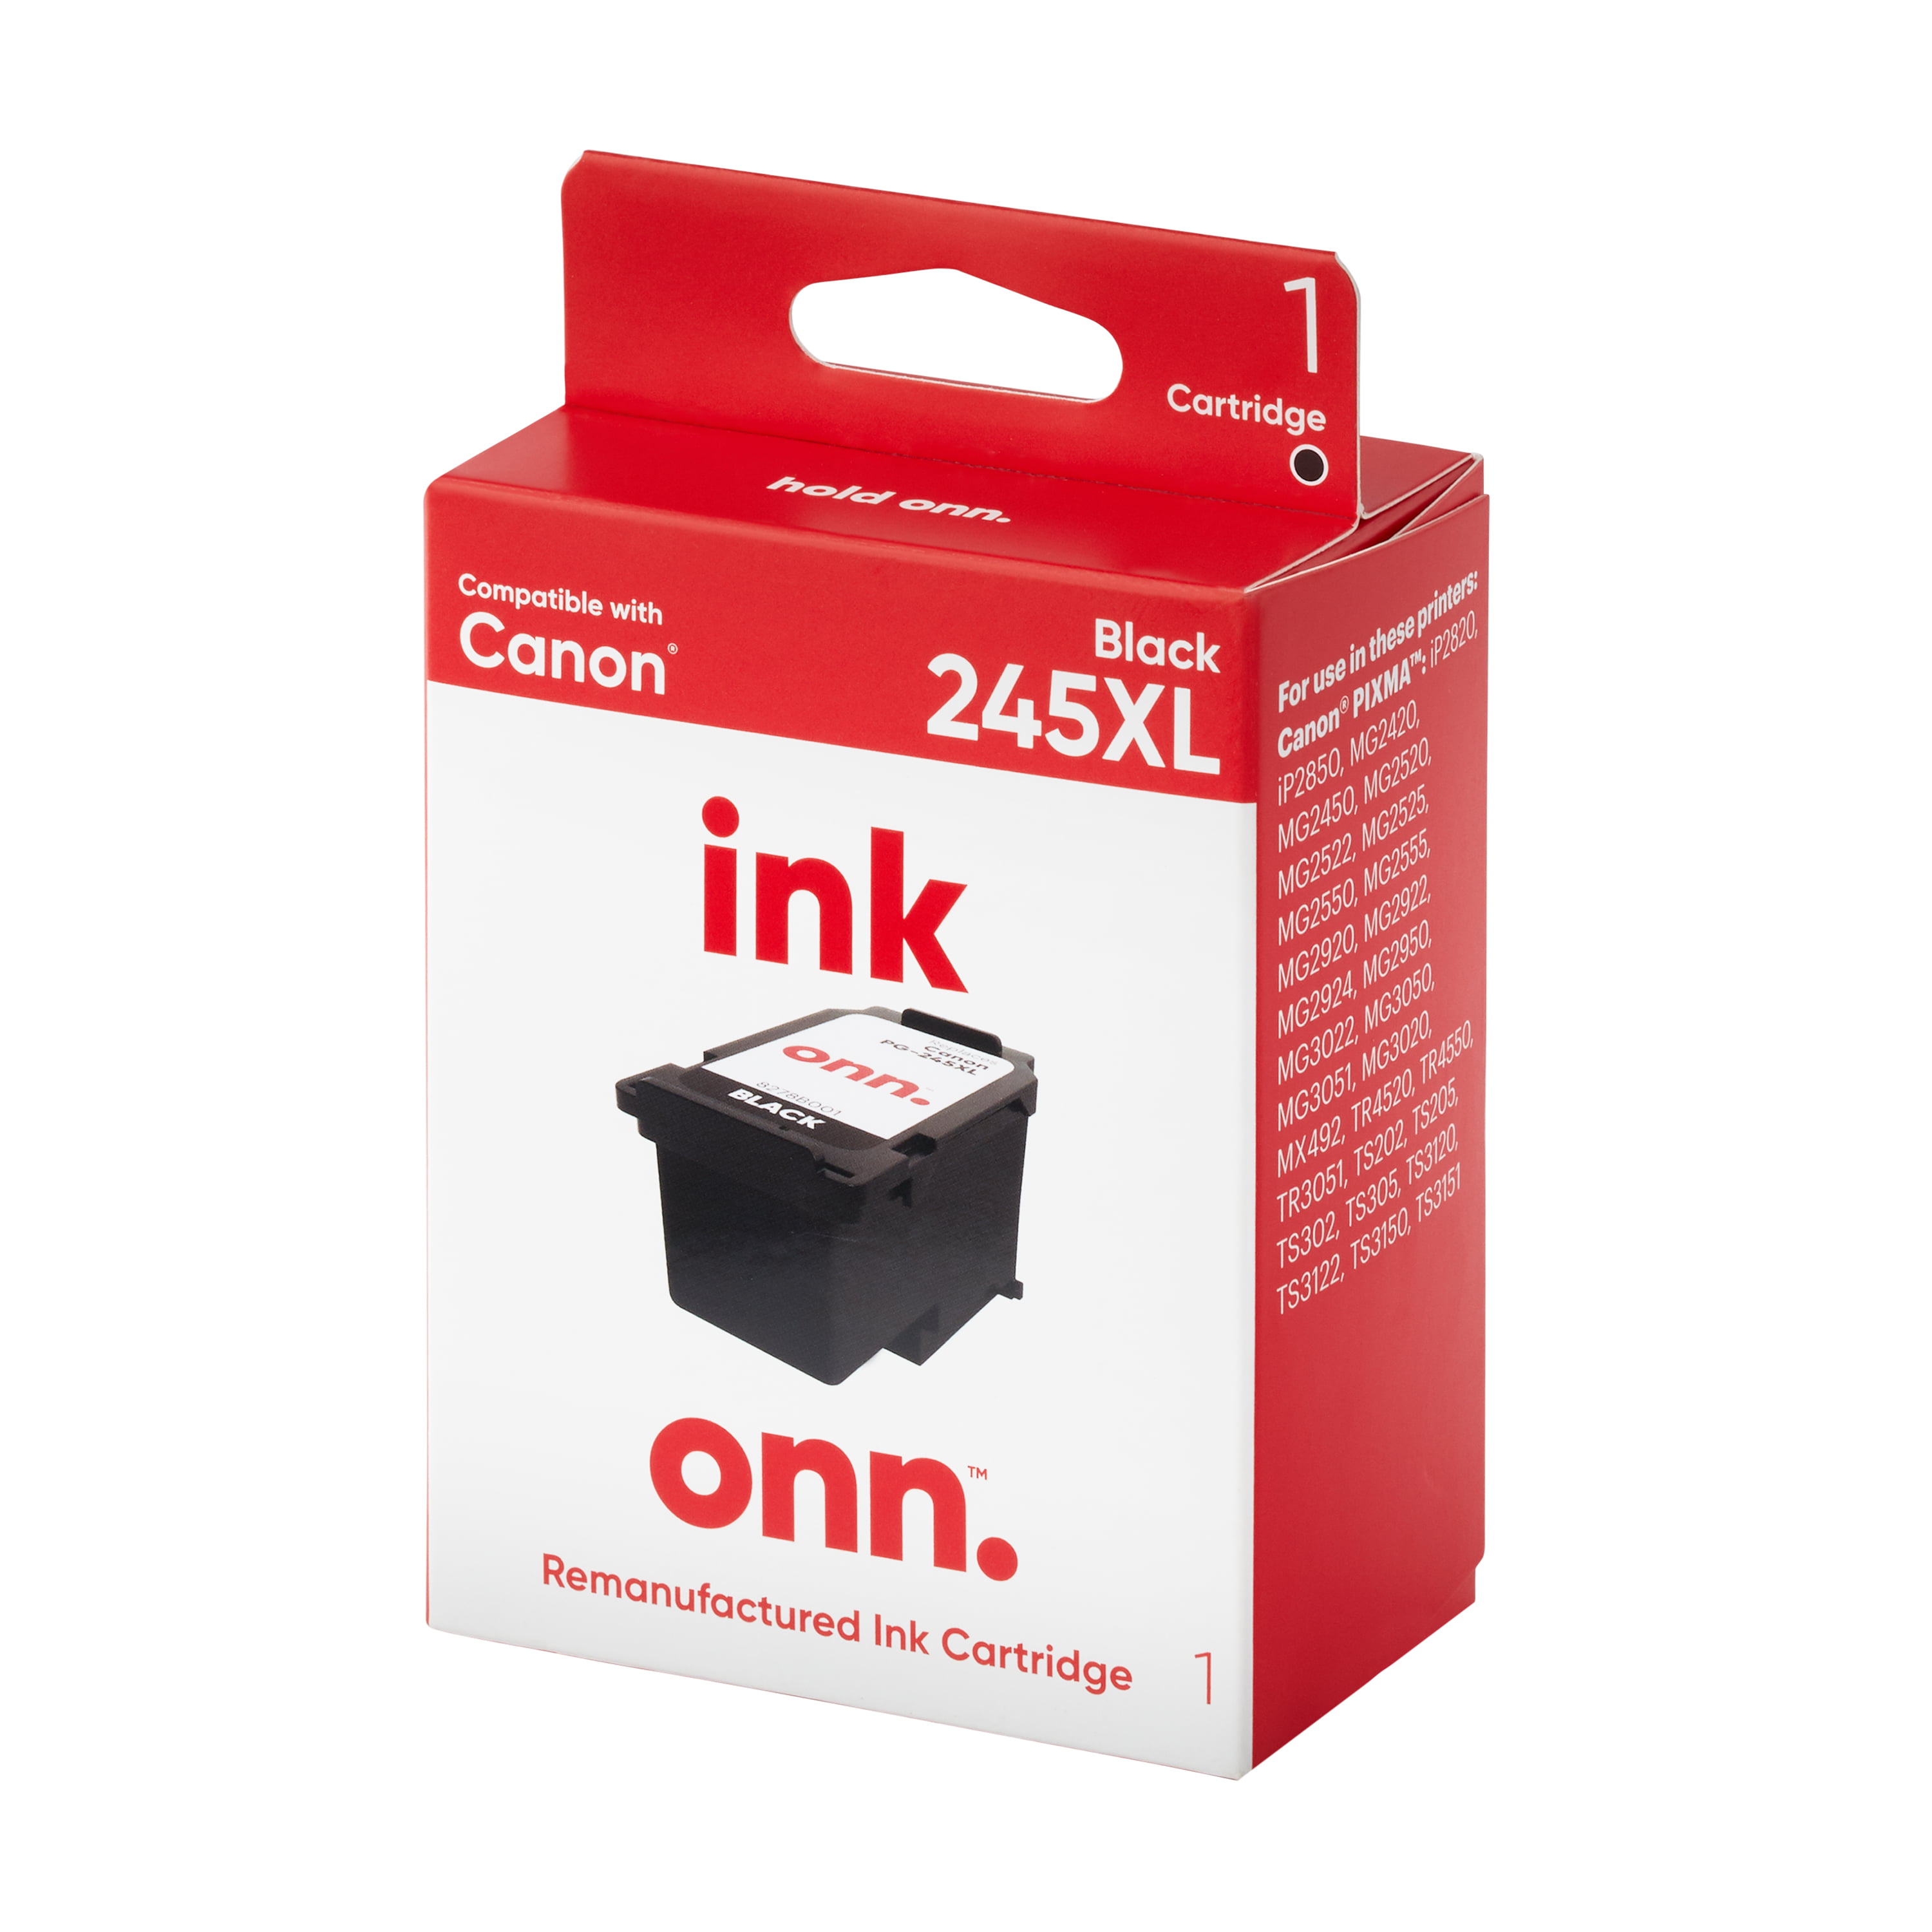 onn. Canon PG245XL Black Remanufactured Ink Cartridge